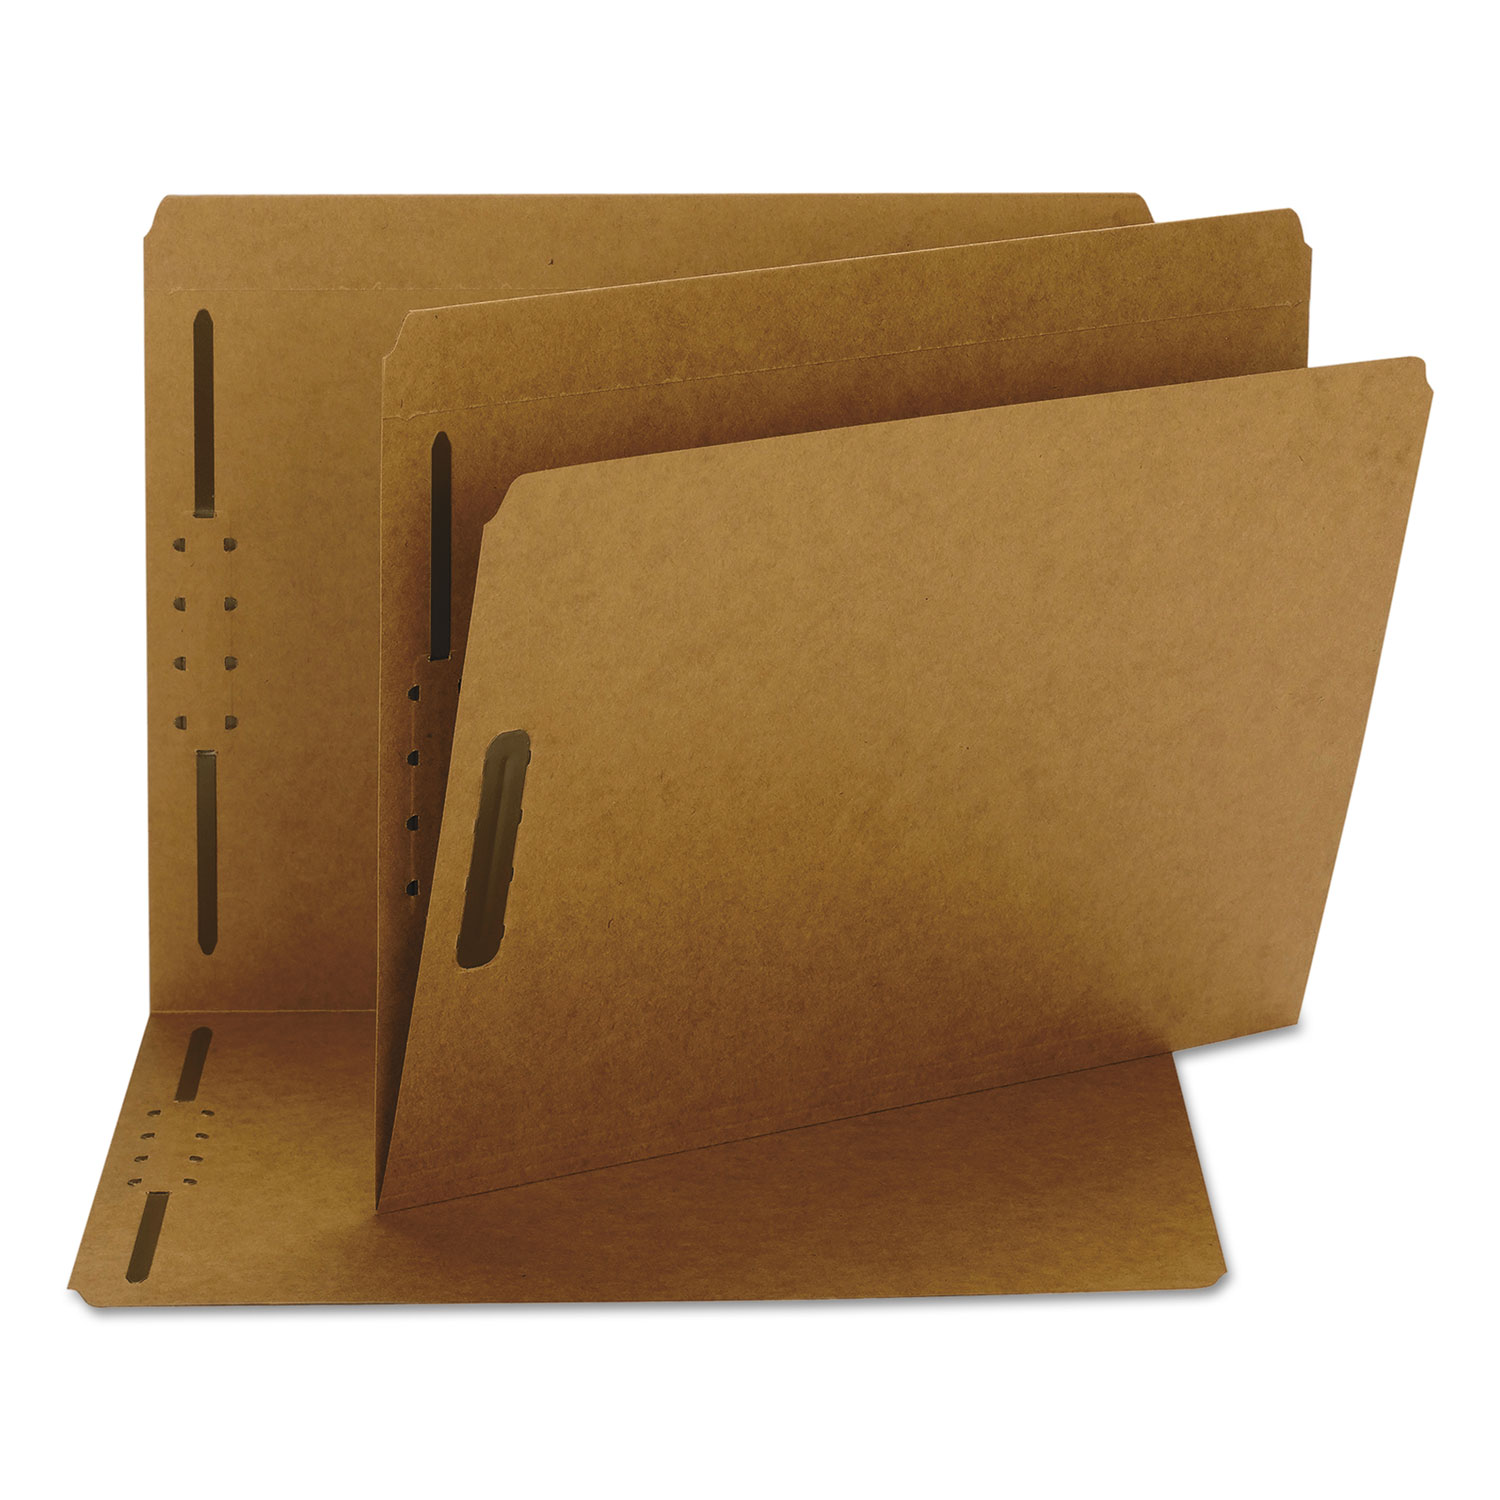 Kraft K Style Fastener Folders, Straight Cut, Top Tab, Letter, Brown, 50/Box